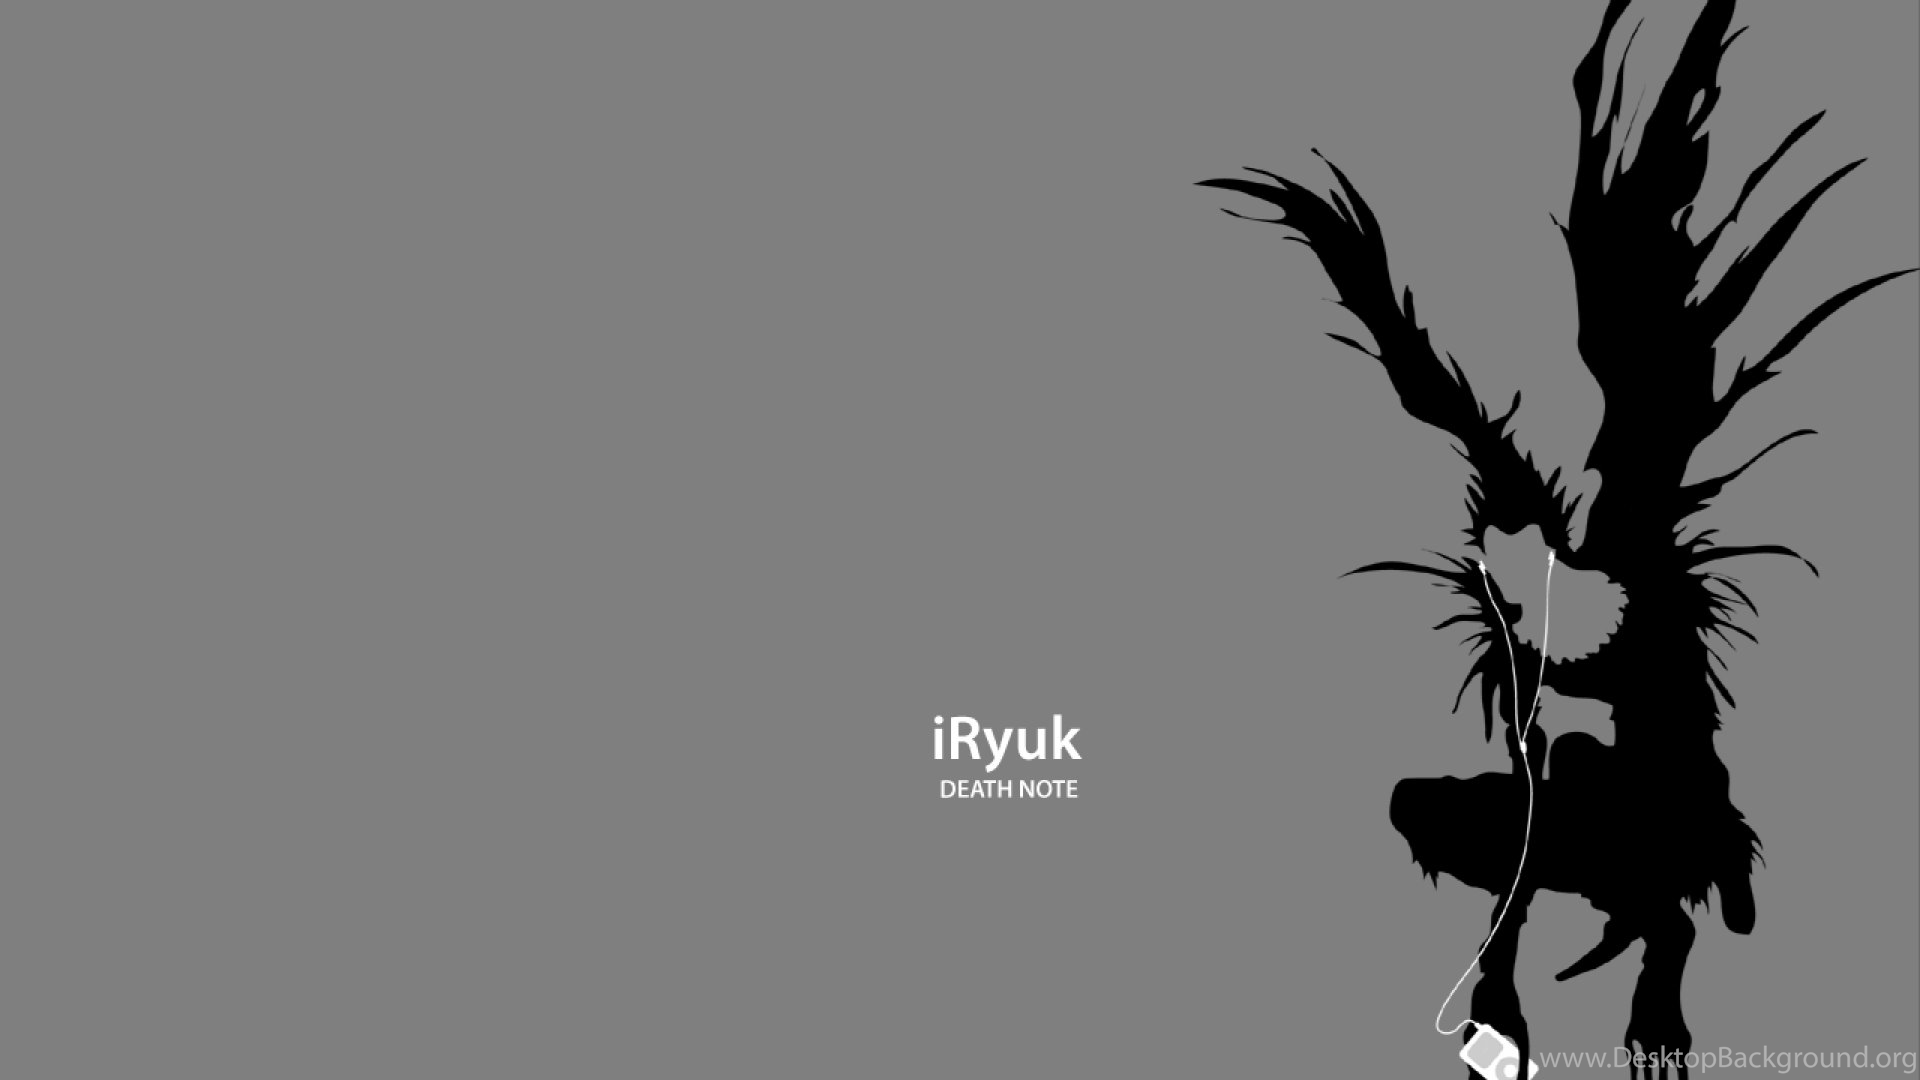 Death Note Ryuk Ipod Wallpaper Desktop Background